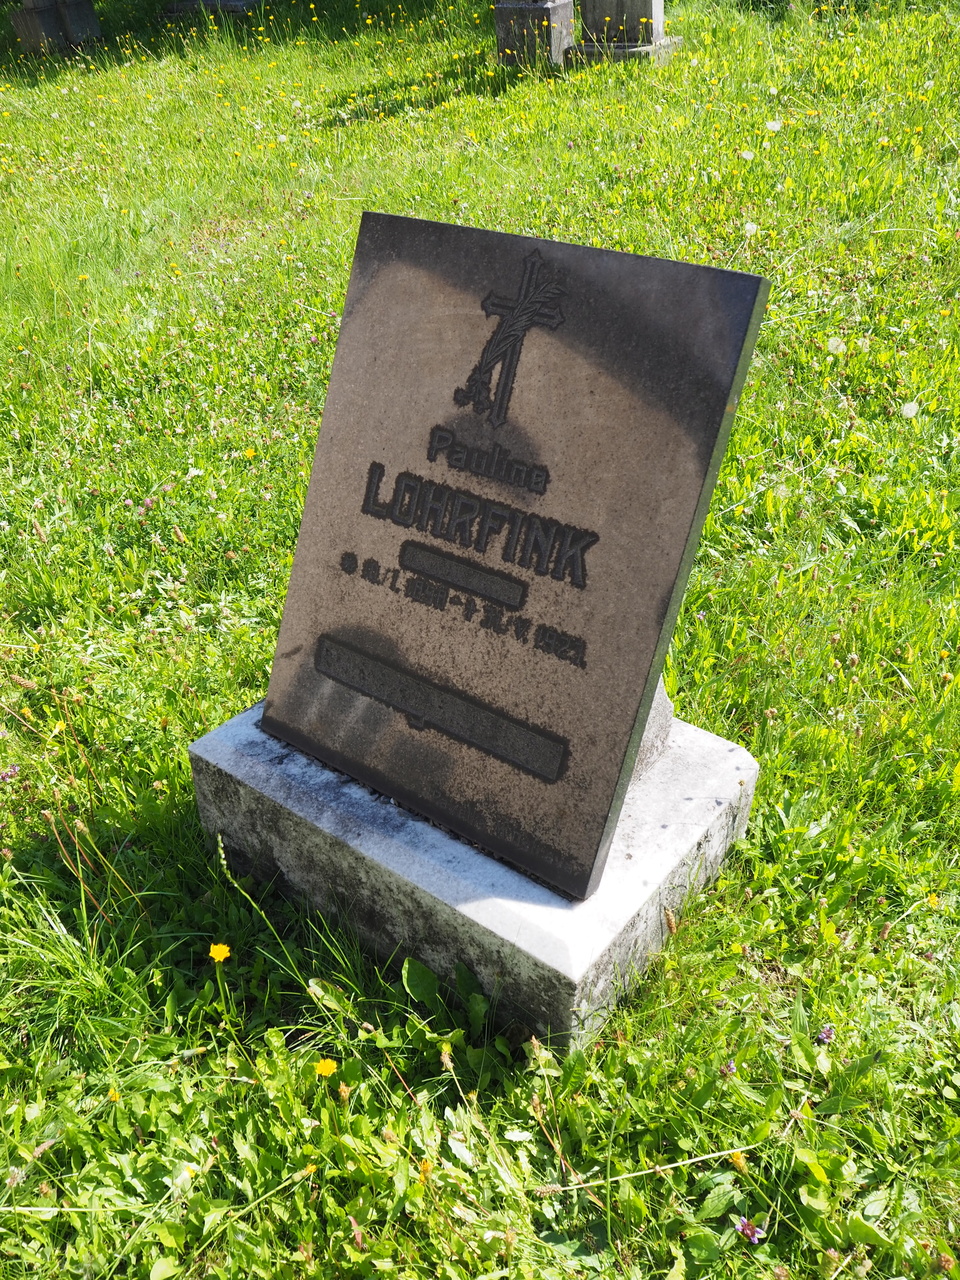 Tombstone of Paulina Loherfink, cemetery in Ligotka Kameralna, as of 2022